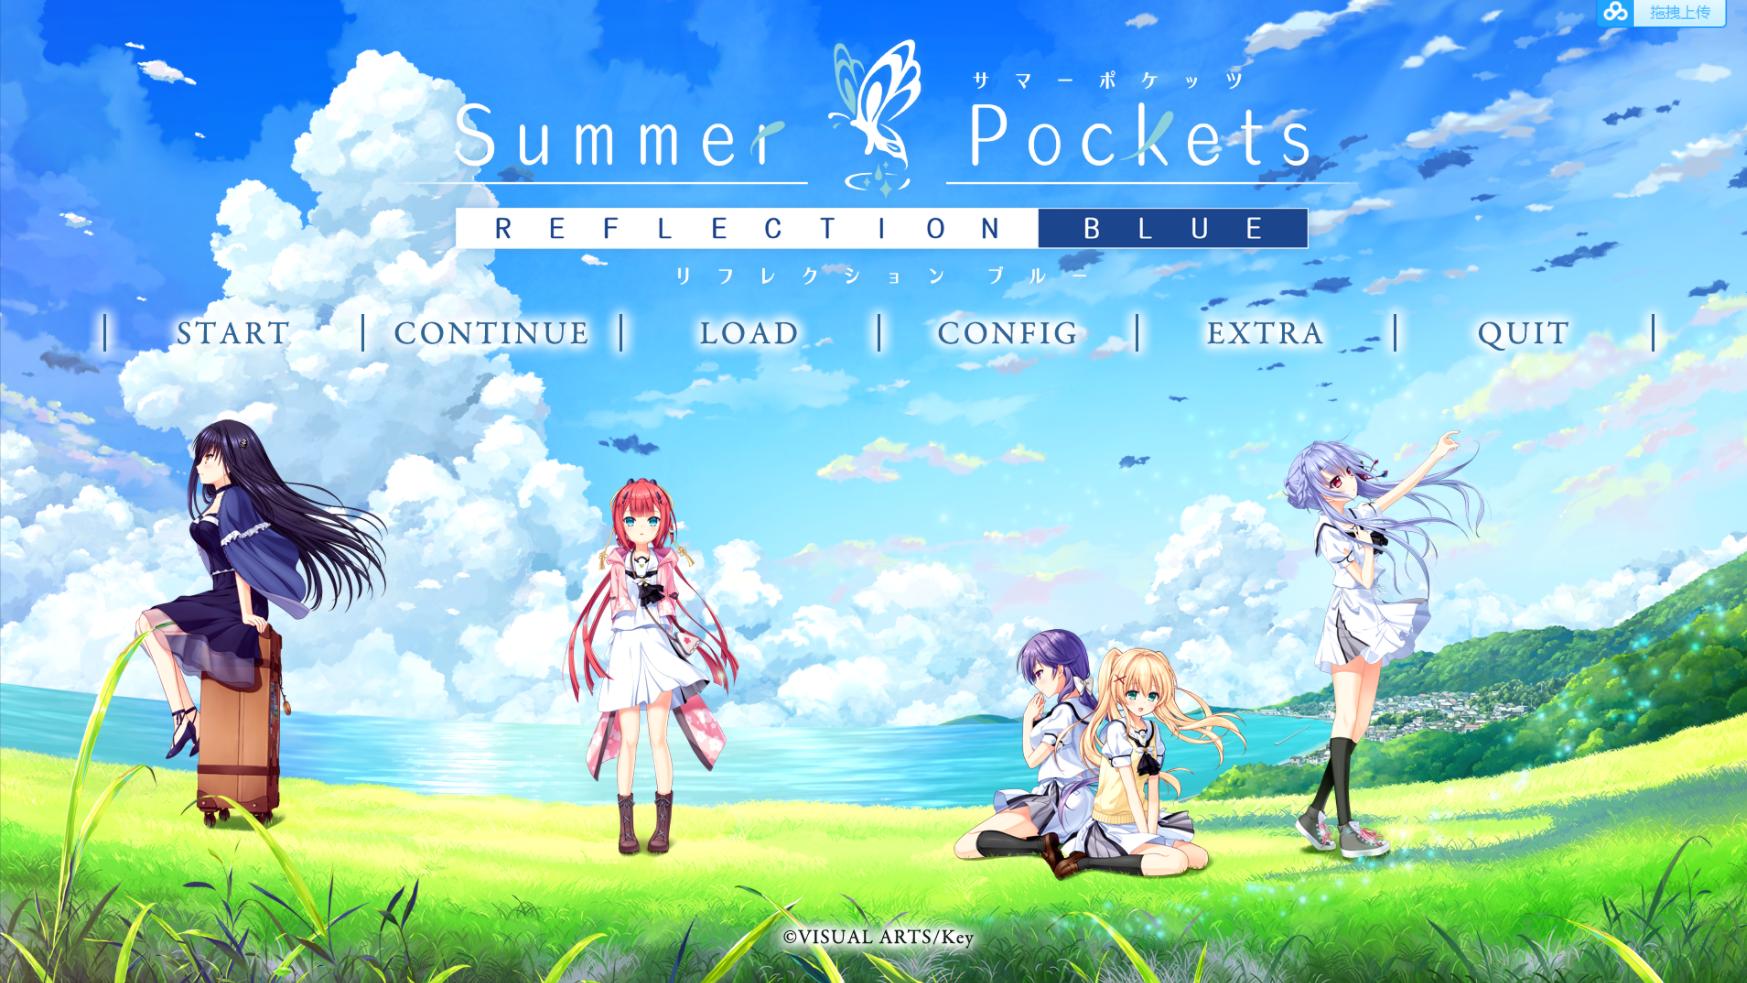 【GalGame】《Summer Pockets REFLECTION BLUE》百度网盘下载